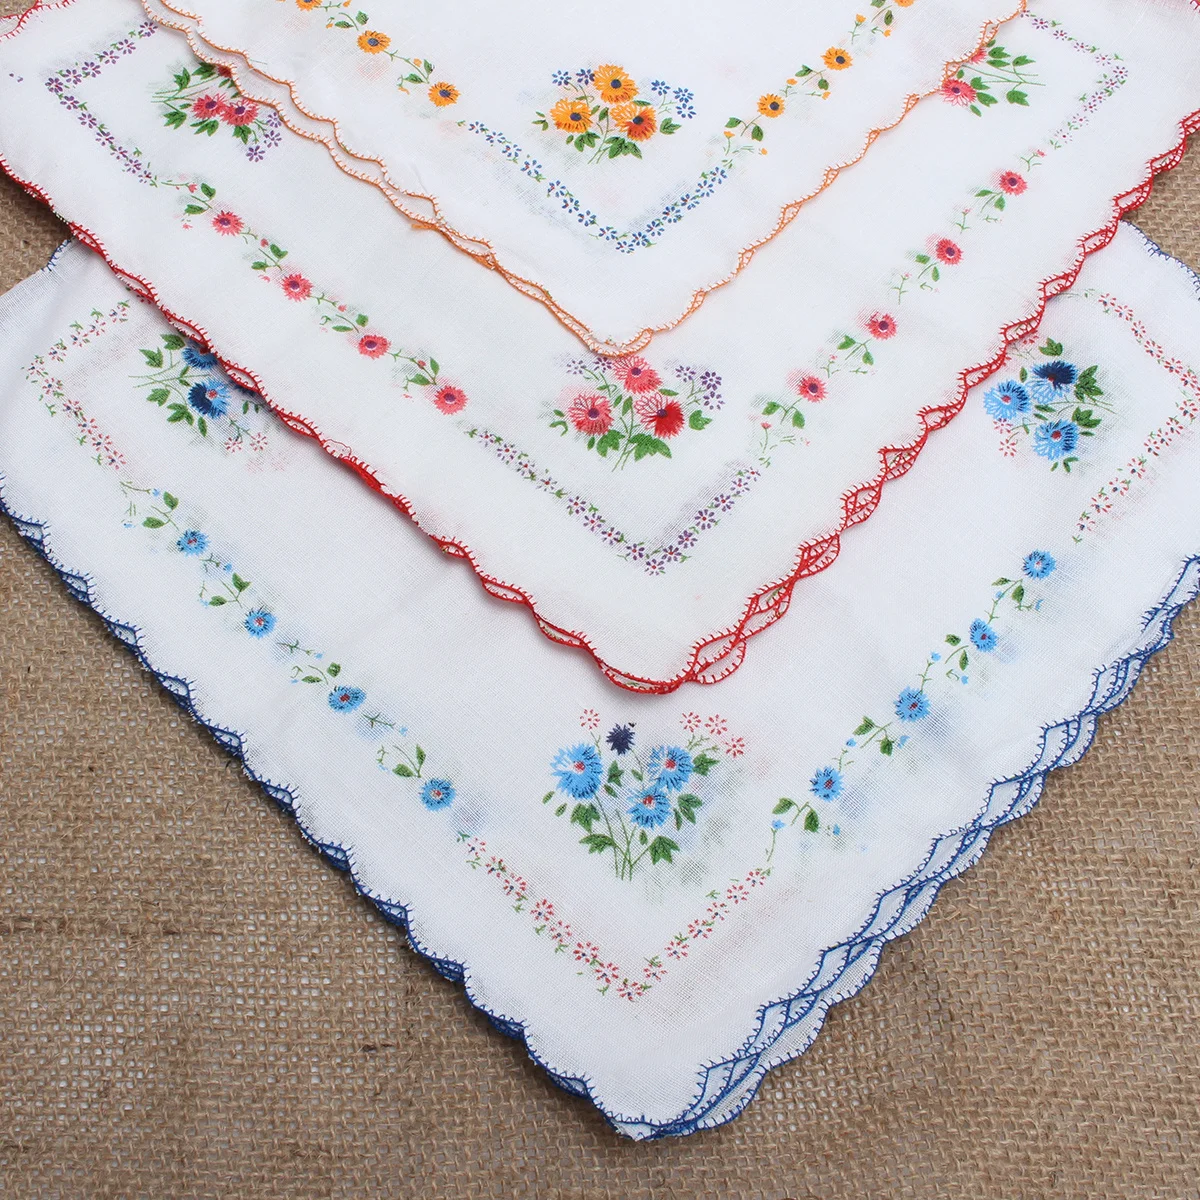 12 pcs Vintage Cotton Floral Pattern Handkerchief Pocket Towel For Women Girls pocket square hankerchief poszetka